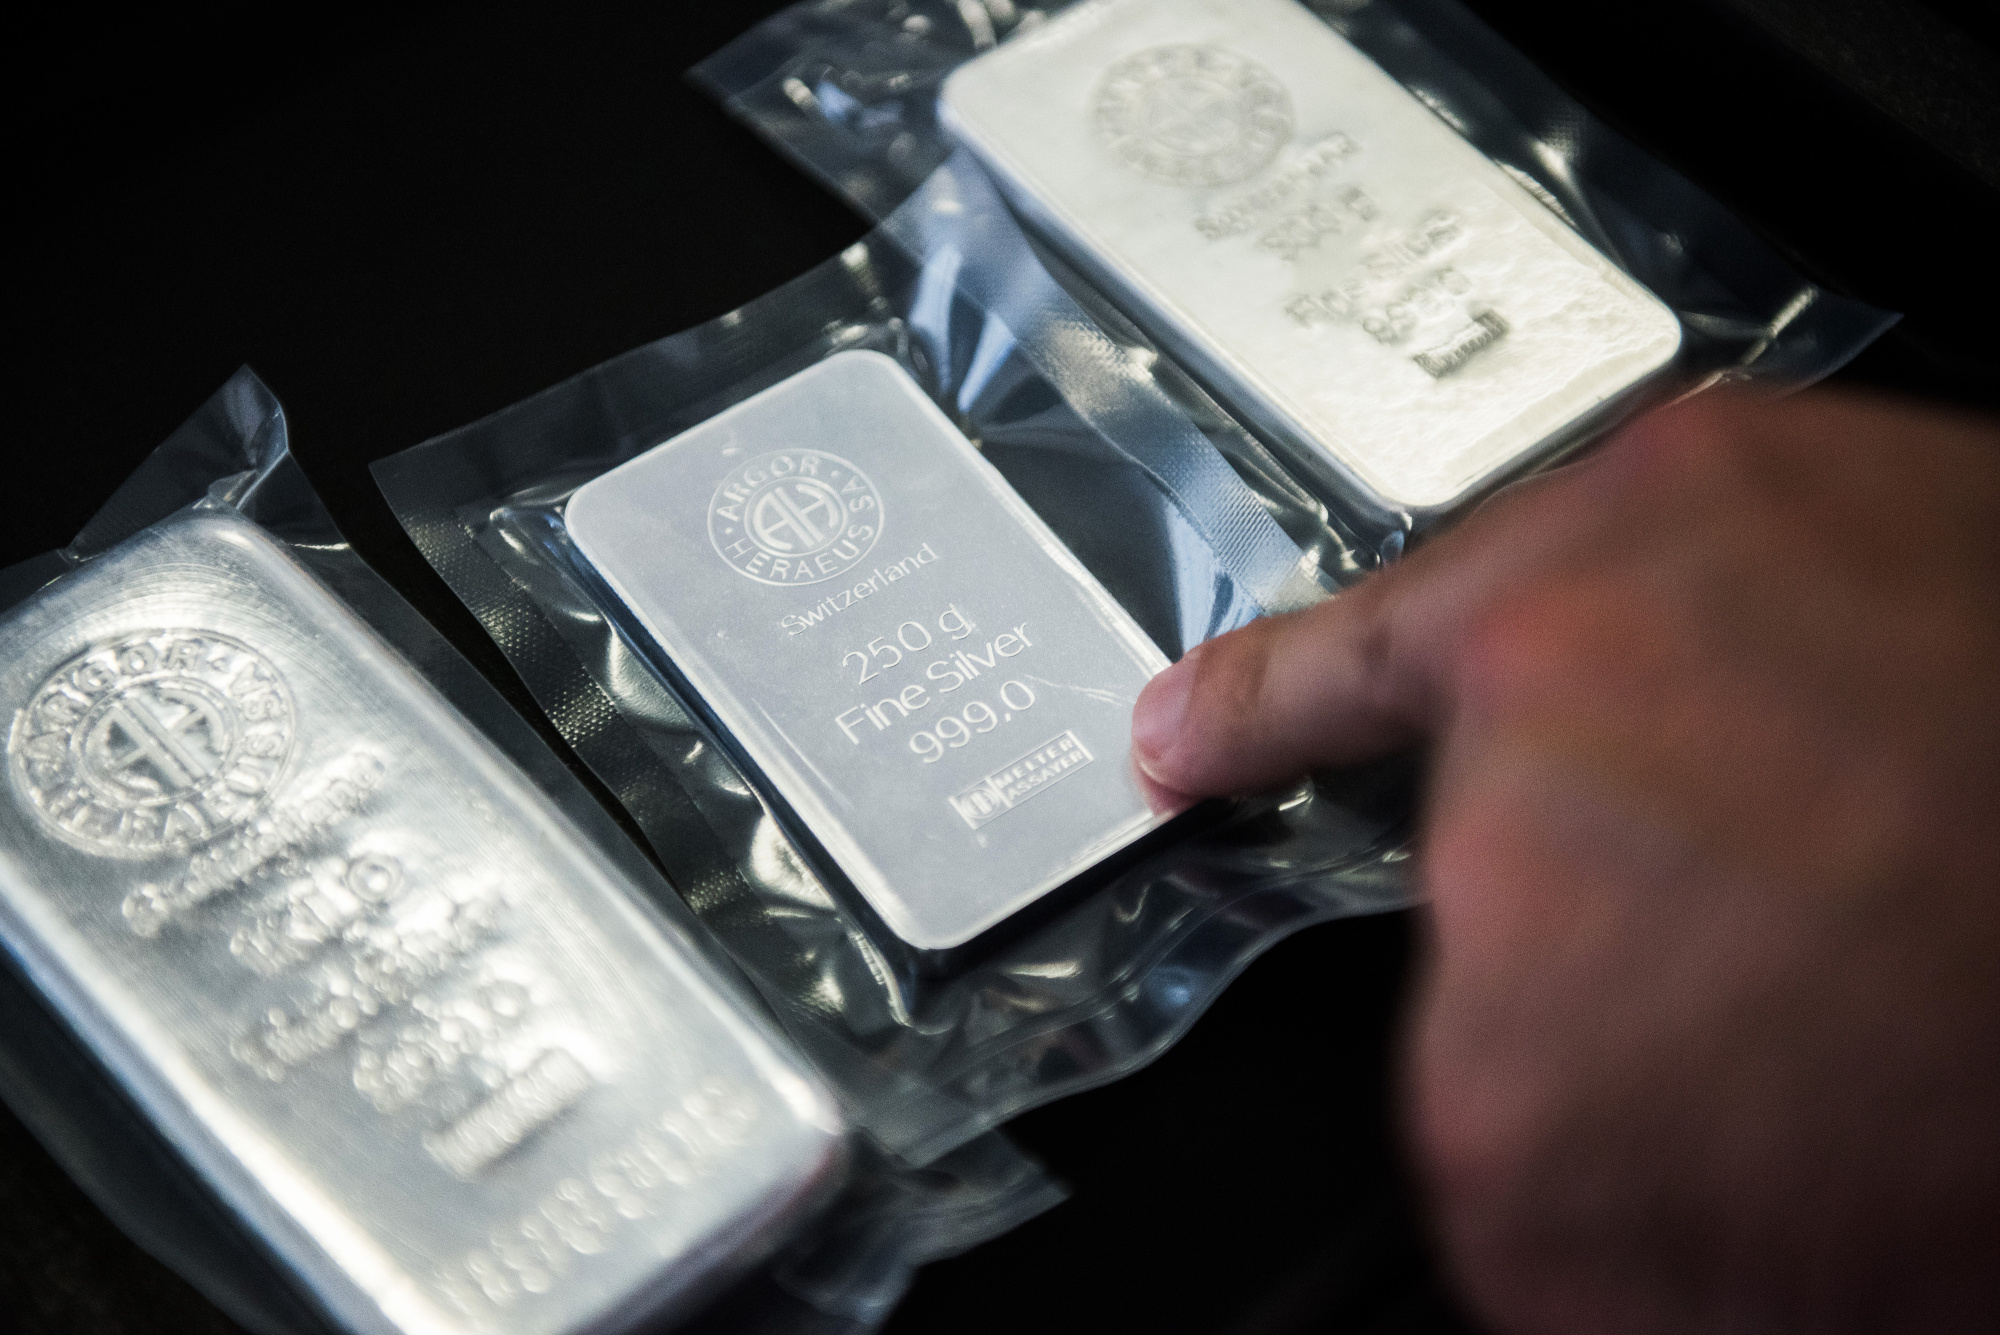 Gold And Silver Inside Aranypiac Kft As Precious Metals Resume Gains Amid Brexit Turmoil